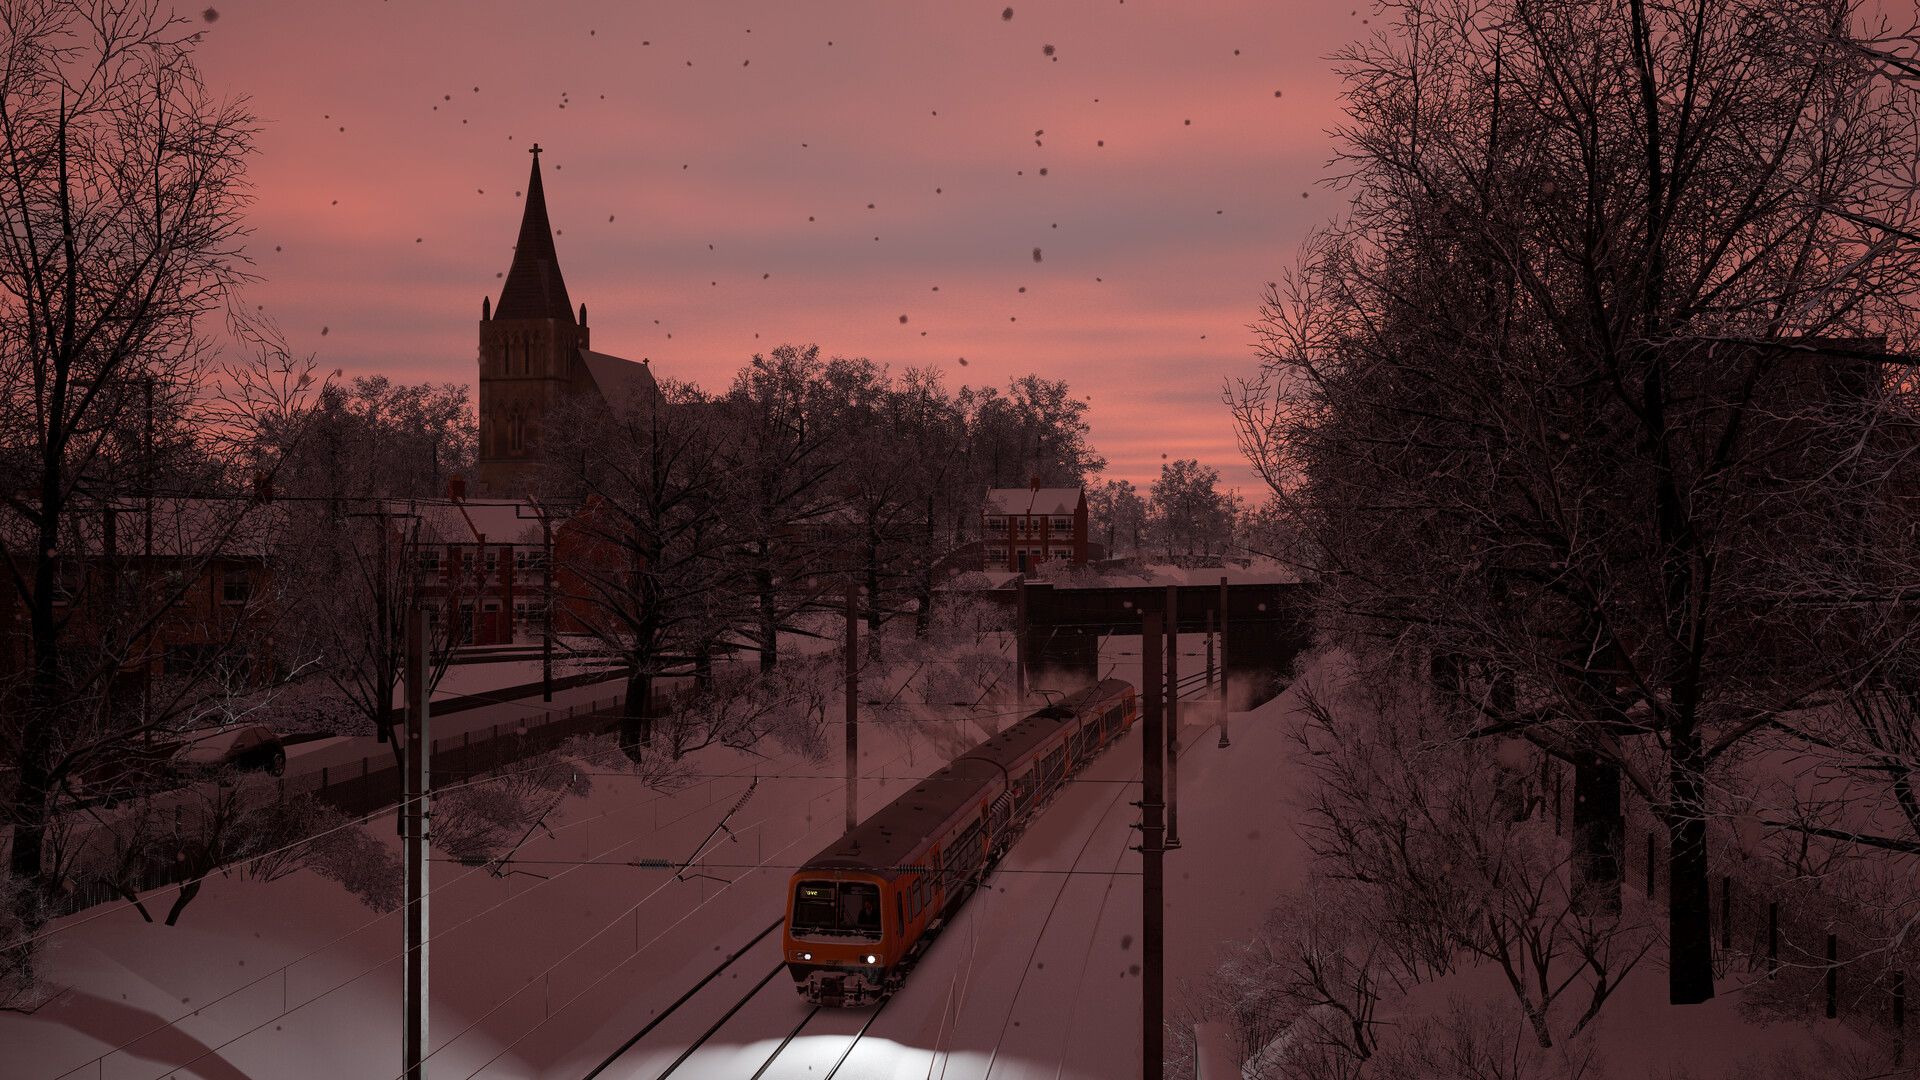 Train Sim World 3 - Birmingham Cross-City Line: Lichfield - Bromsgrove & Redditch Route Add-On DLC Steam CD Key 22.54 $